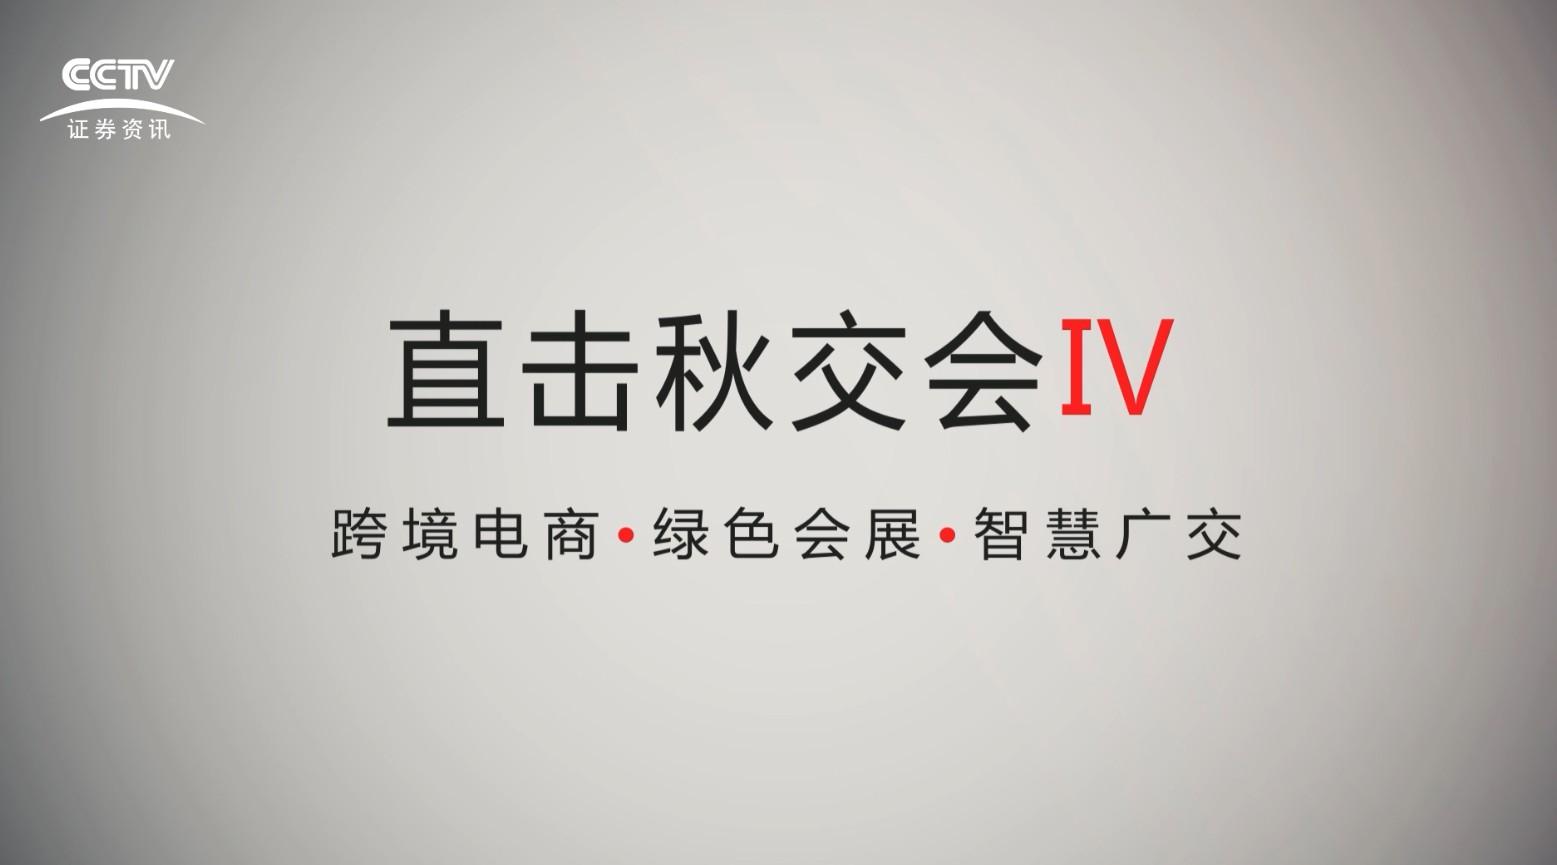 CCTV证券资讯频道《城建与生活》直击秋交会（广交会）IV